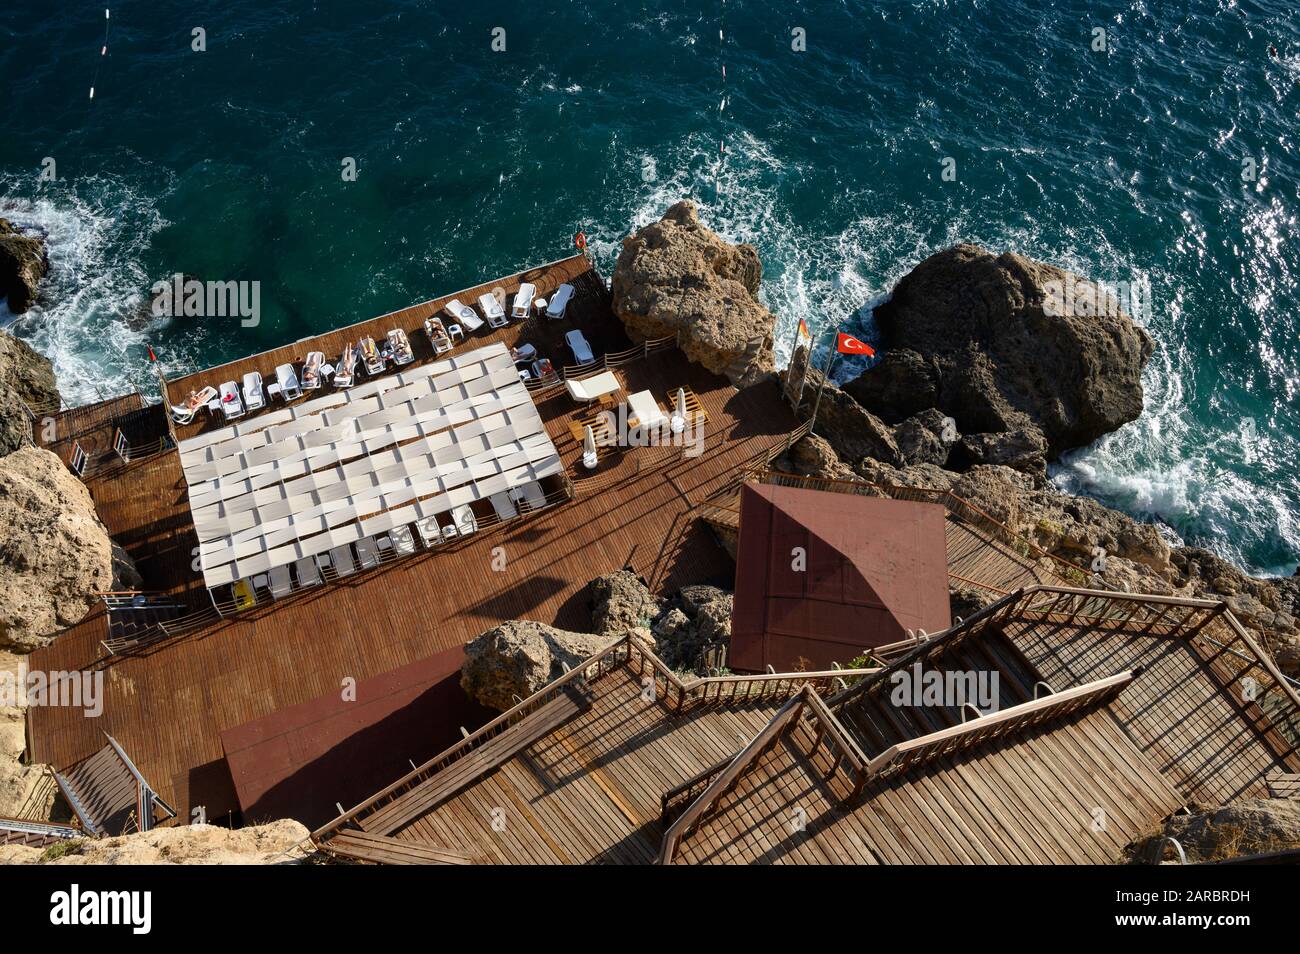 Oz Hotels in Antalya, Turkey - Seaside resort sun terrace built into the cliffs on the Mediterranean coast Stock Photo